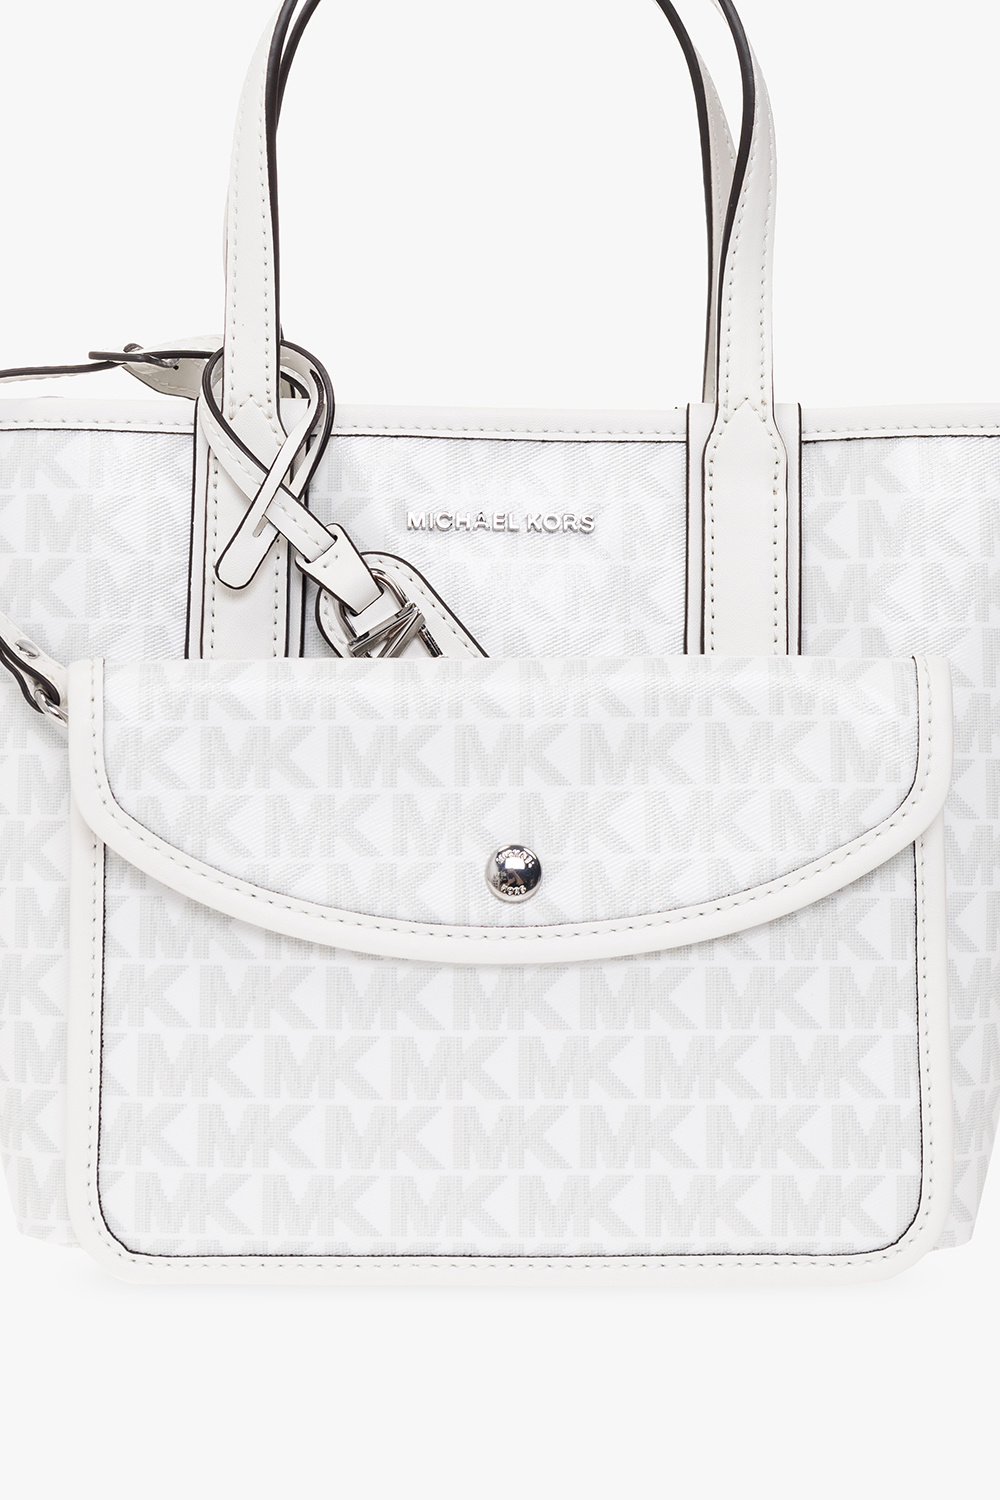 Michael Kors Eliza White Shopping Bag